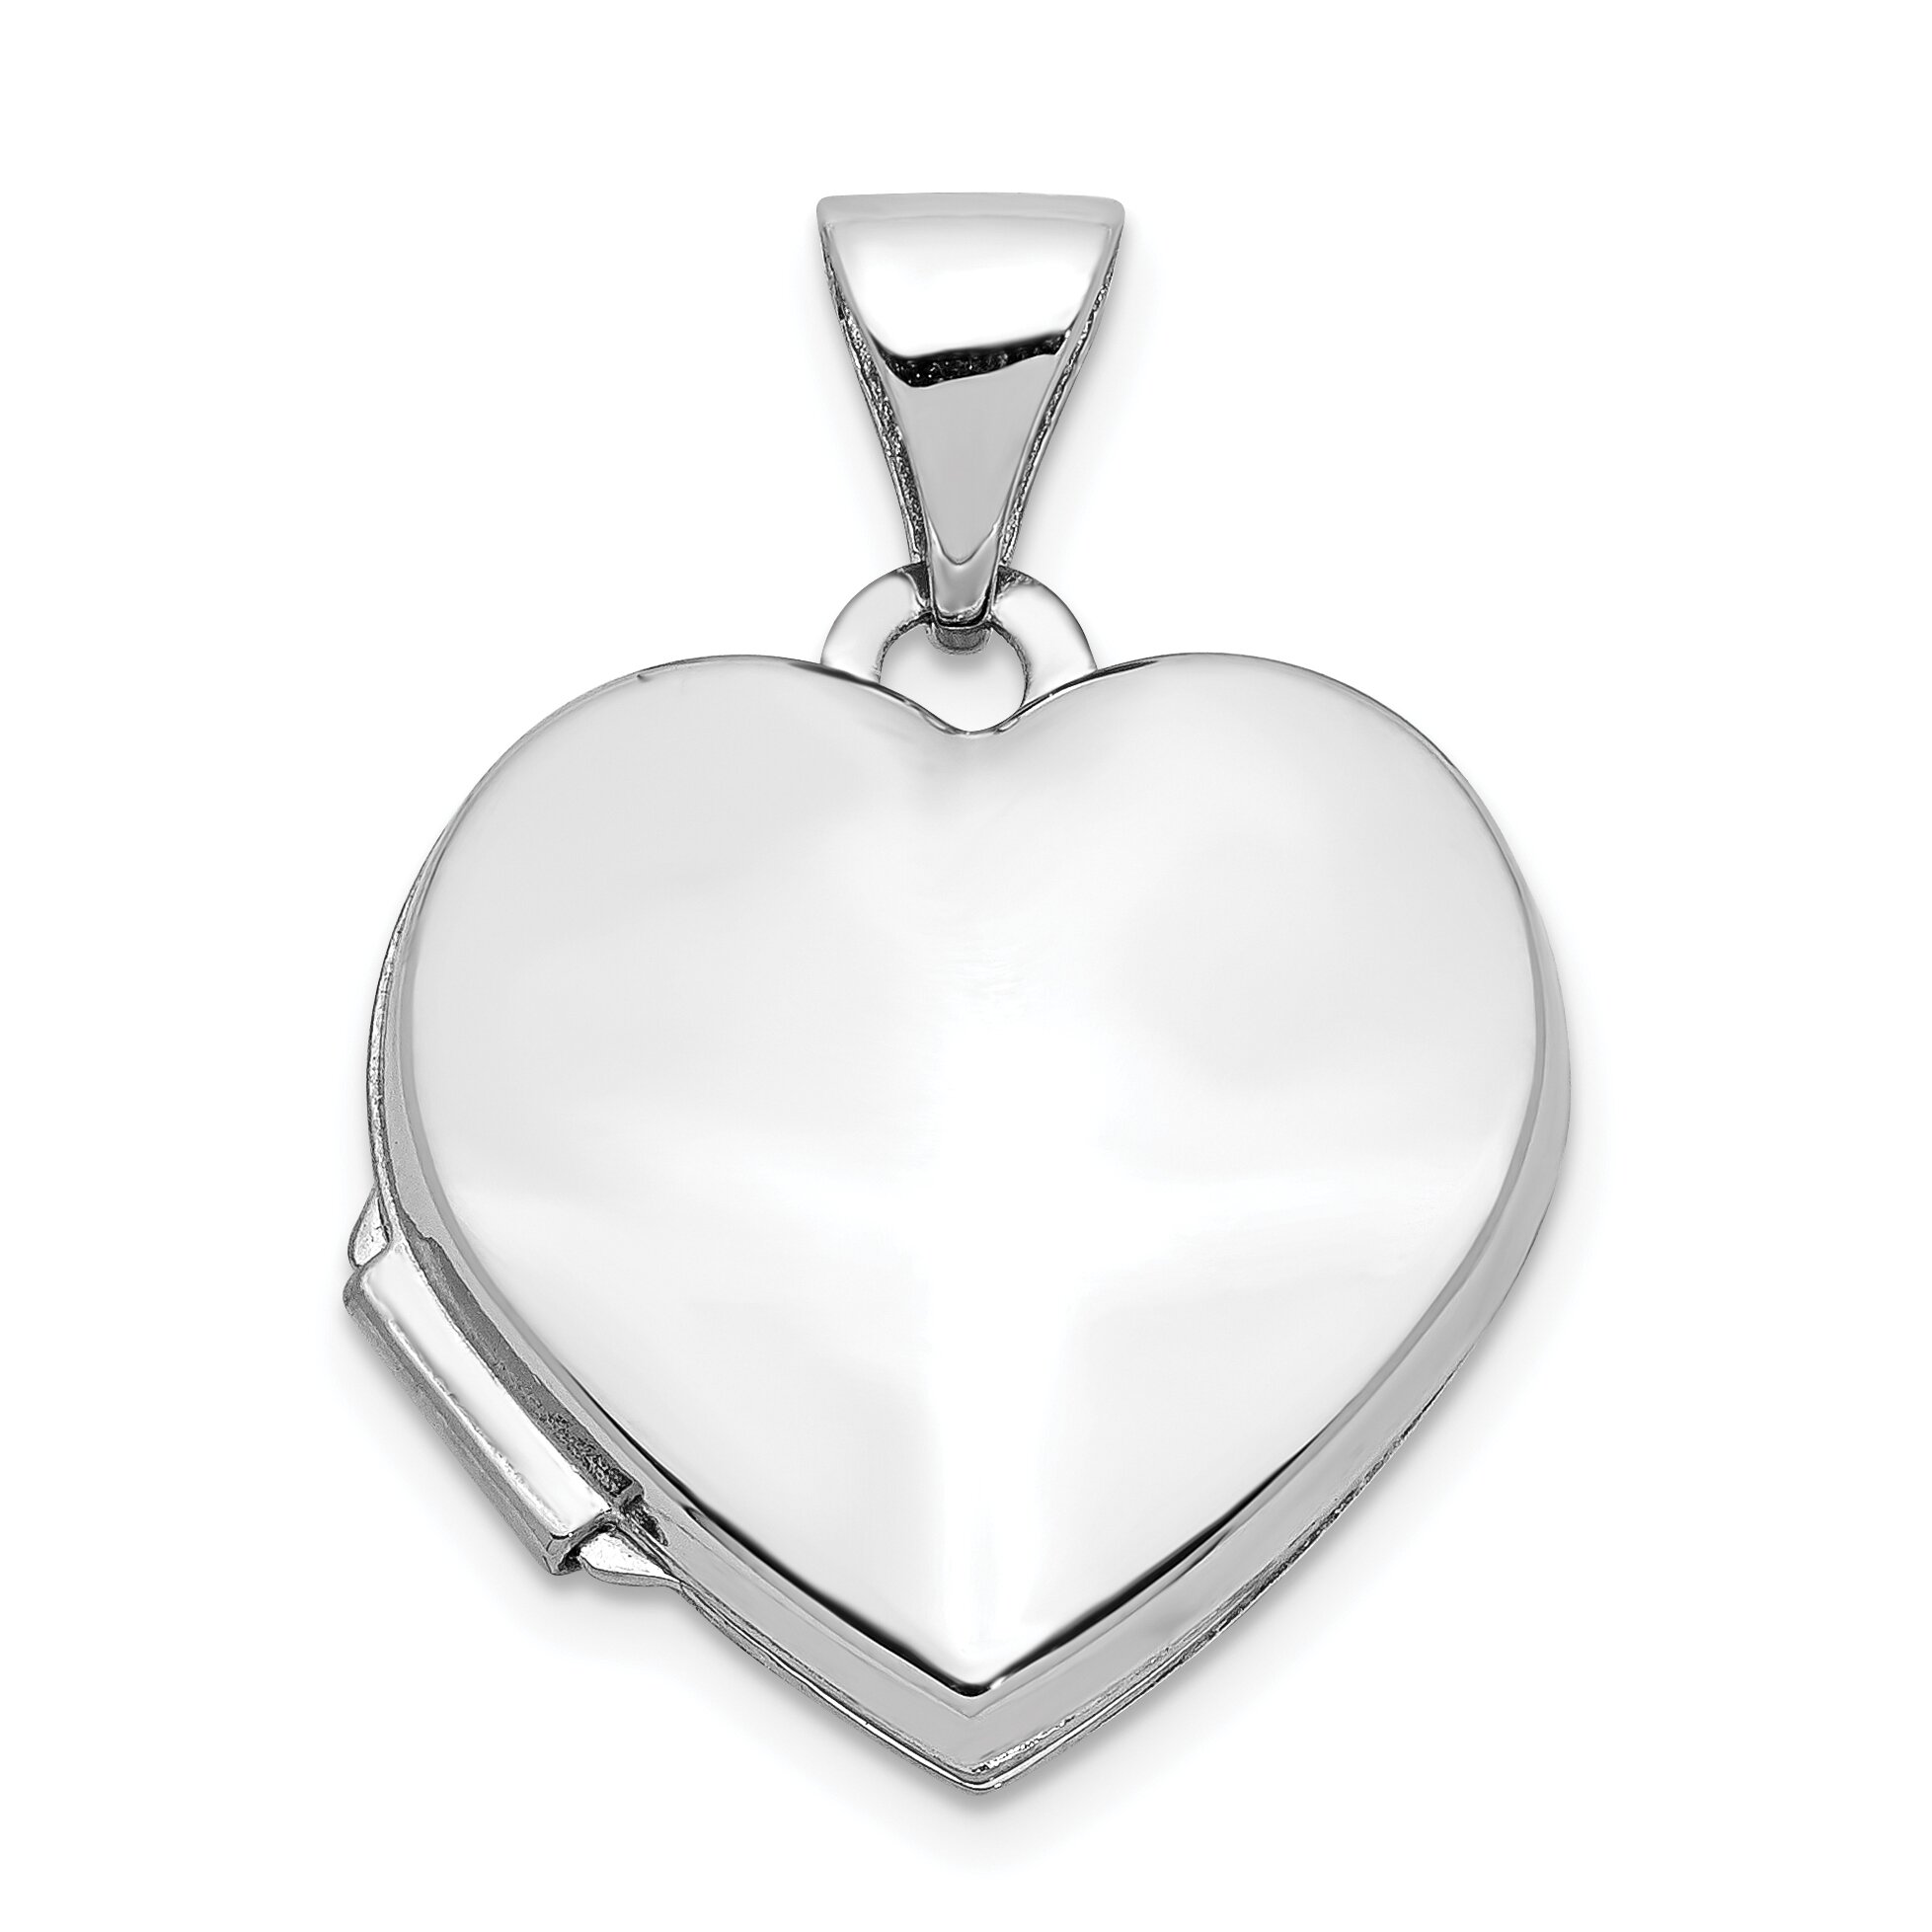 Findingking 14K White Gold Heart Locket Photo Pendant Jewelry